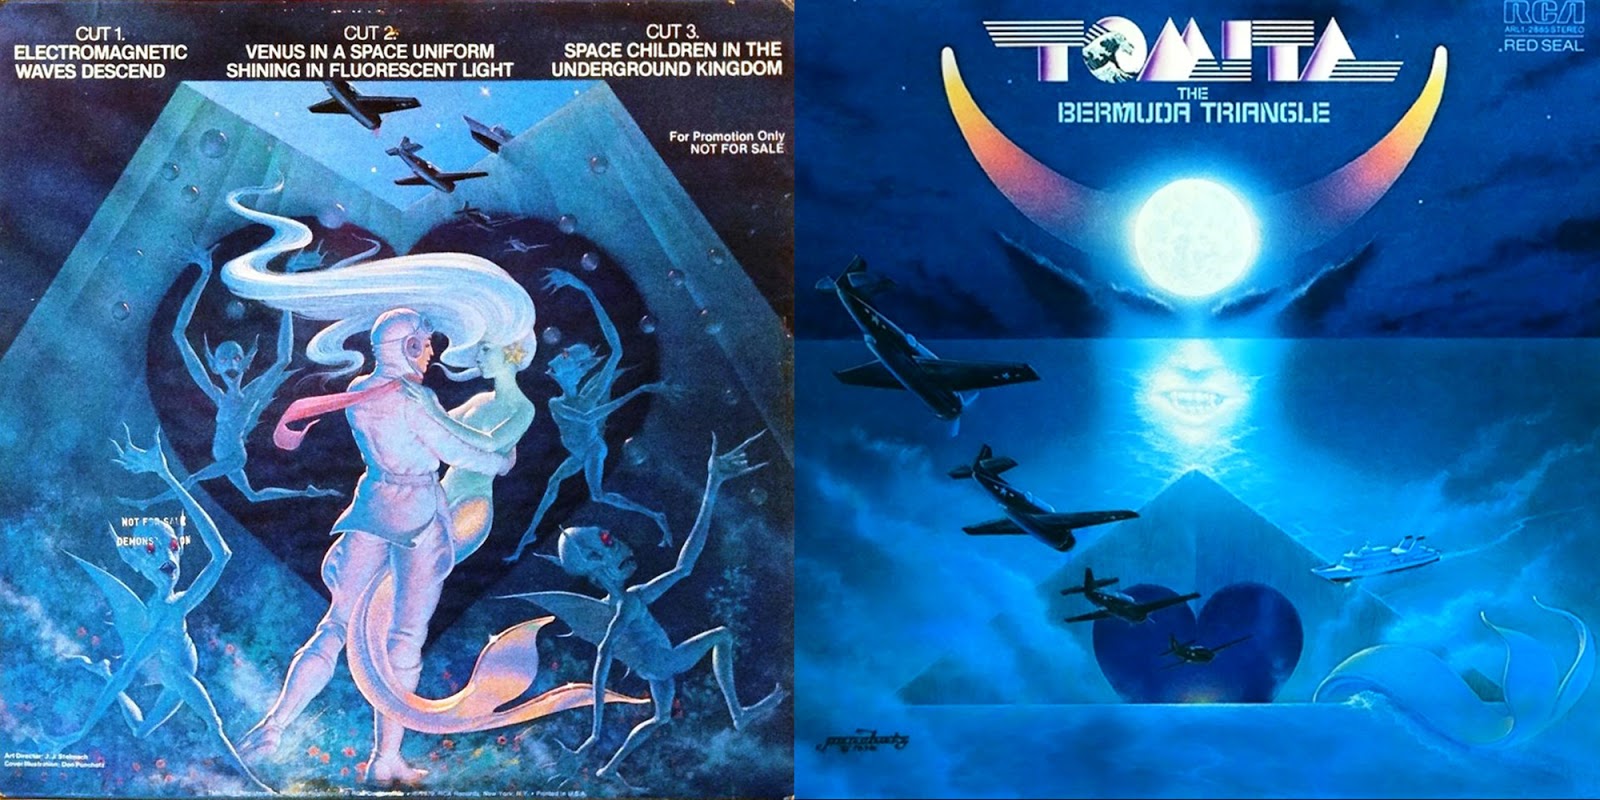 tomita bermuda triangle album cover.jpg